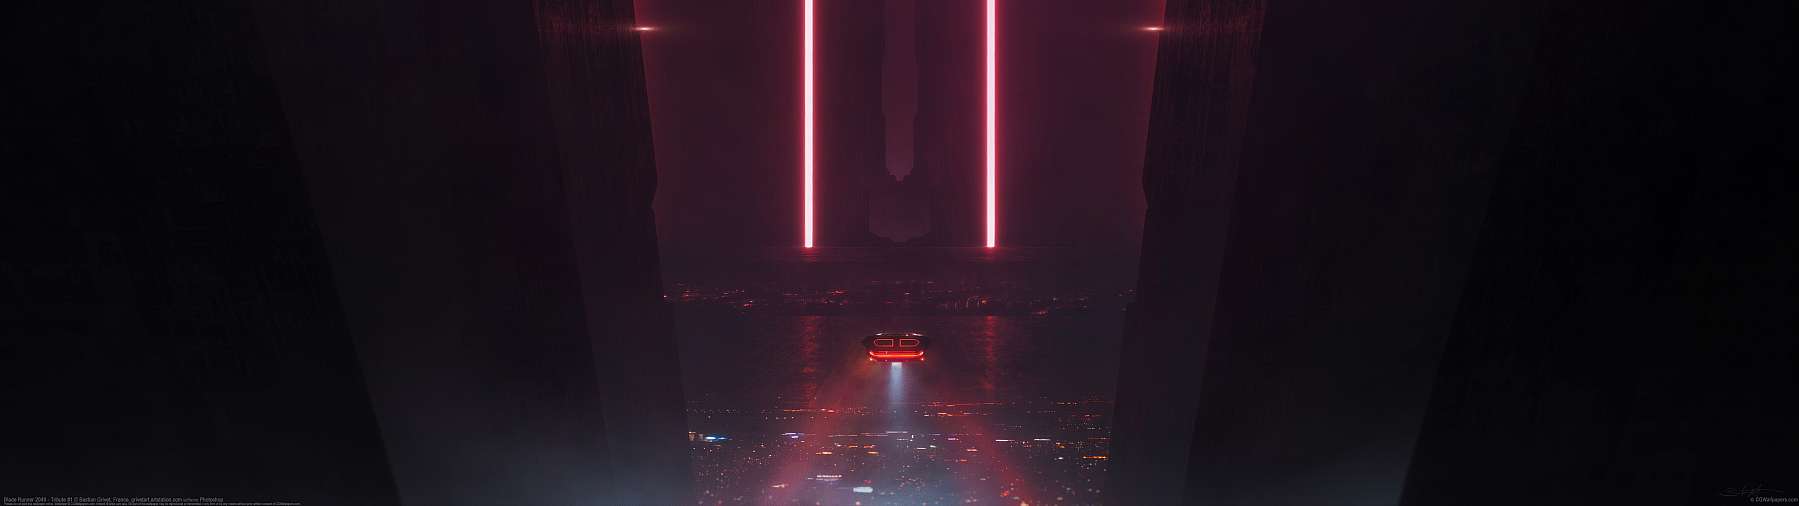 Blade Runner 2049 - Tribute #1 ultrawide achtergrond